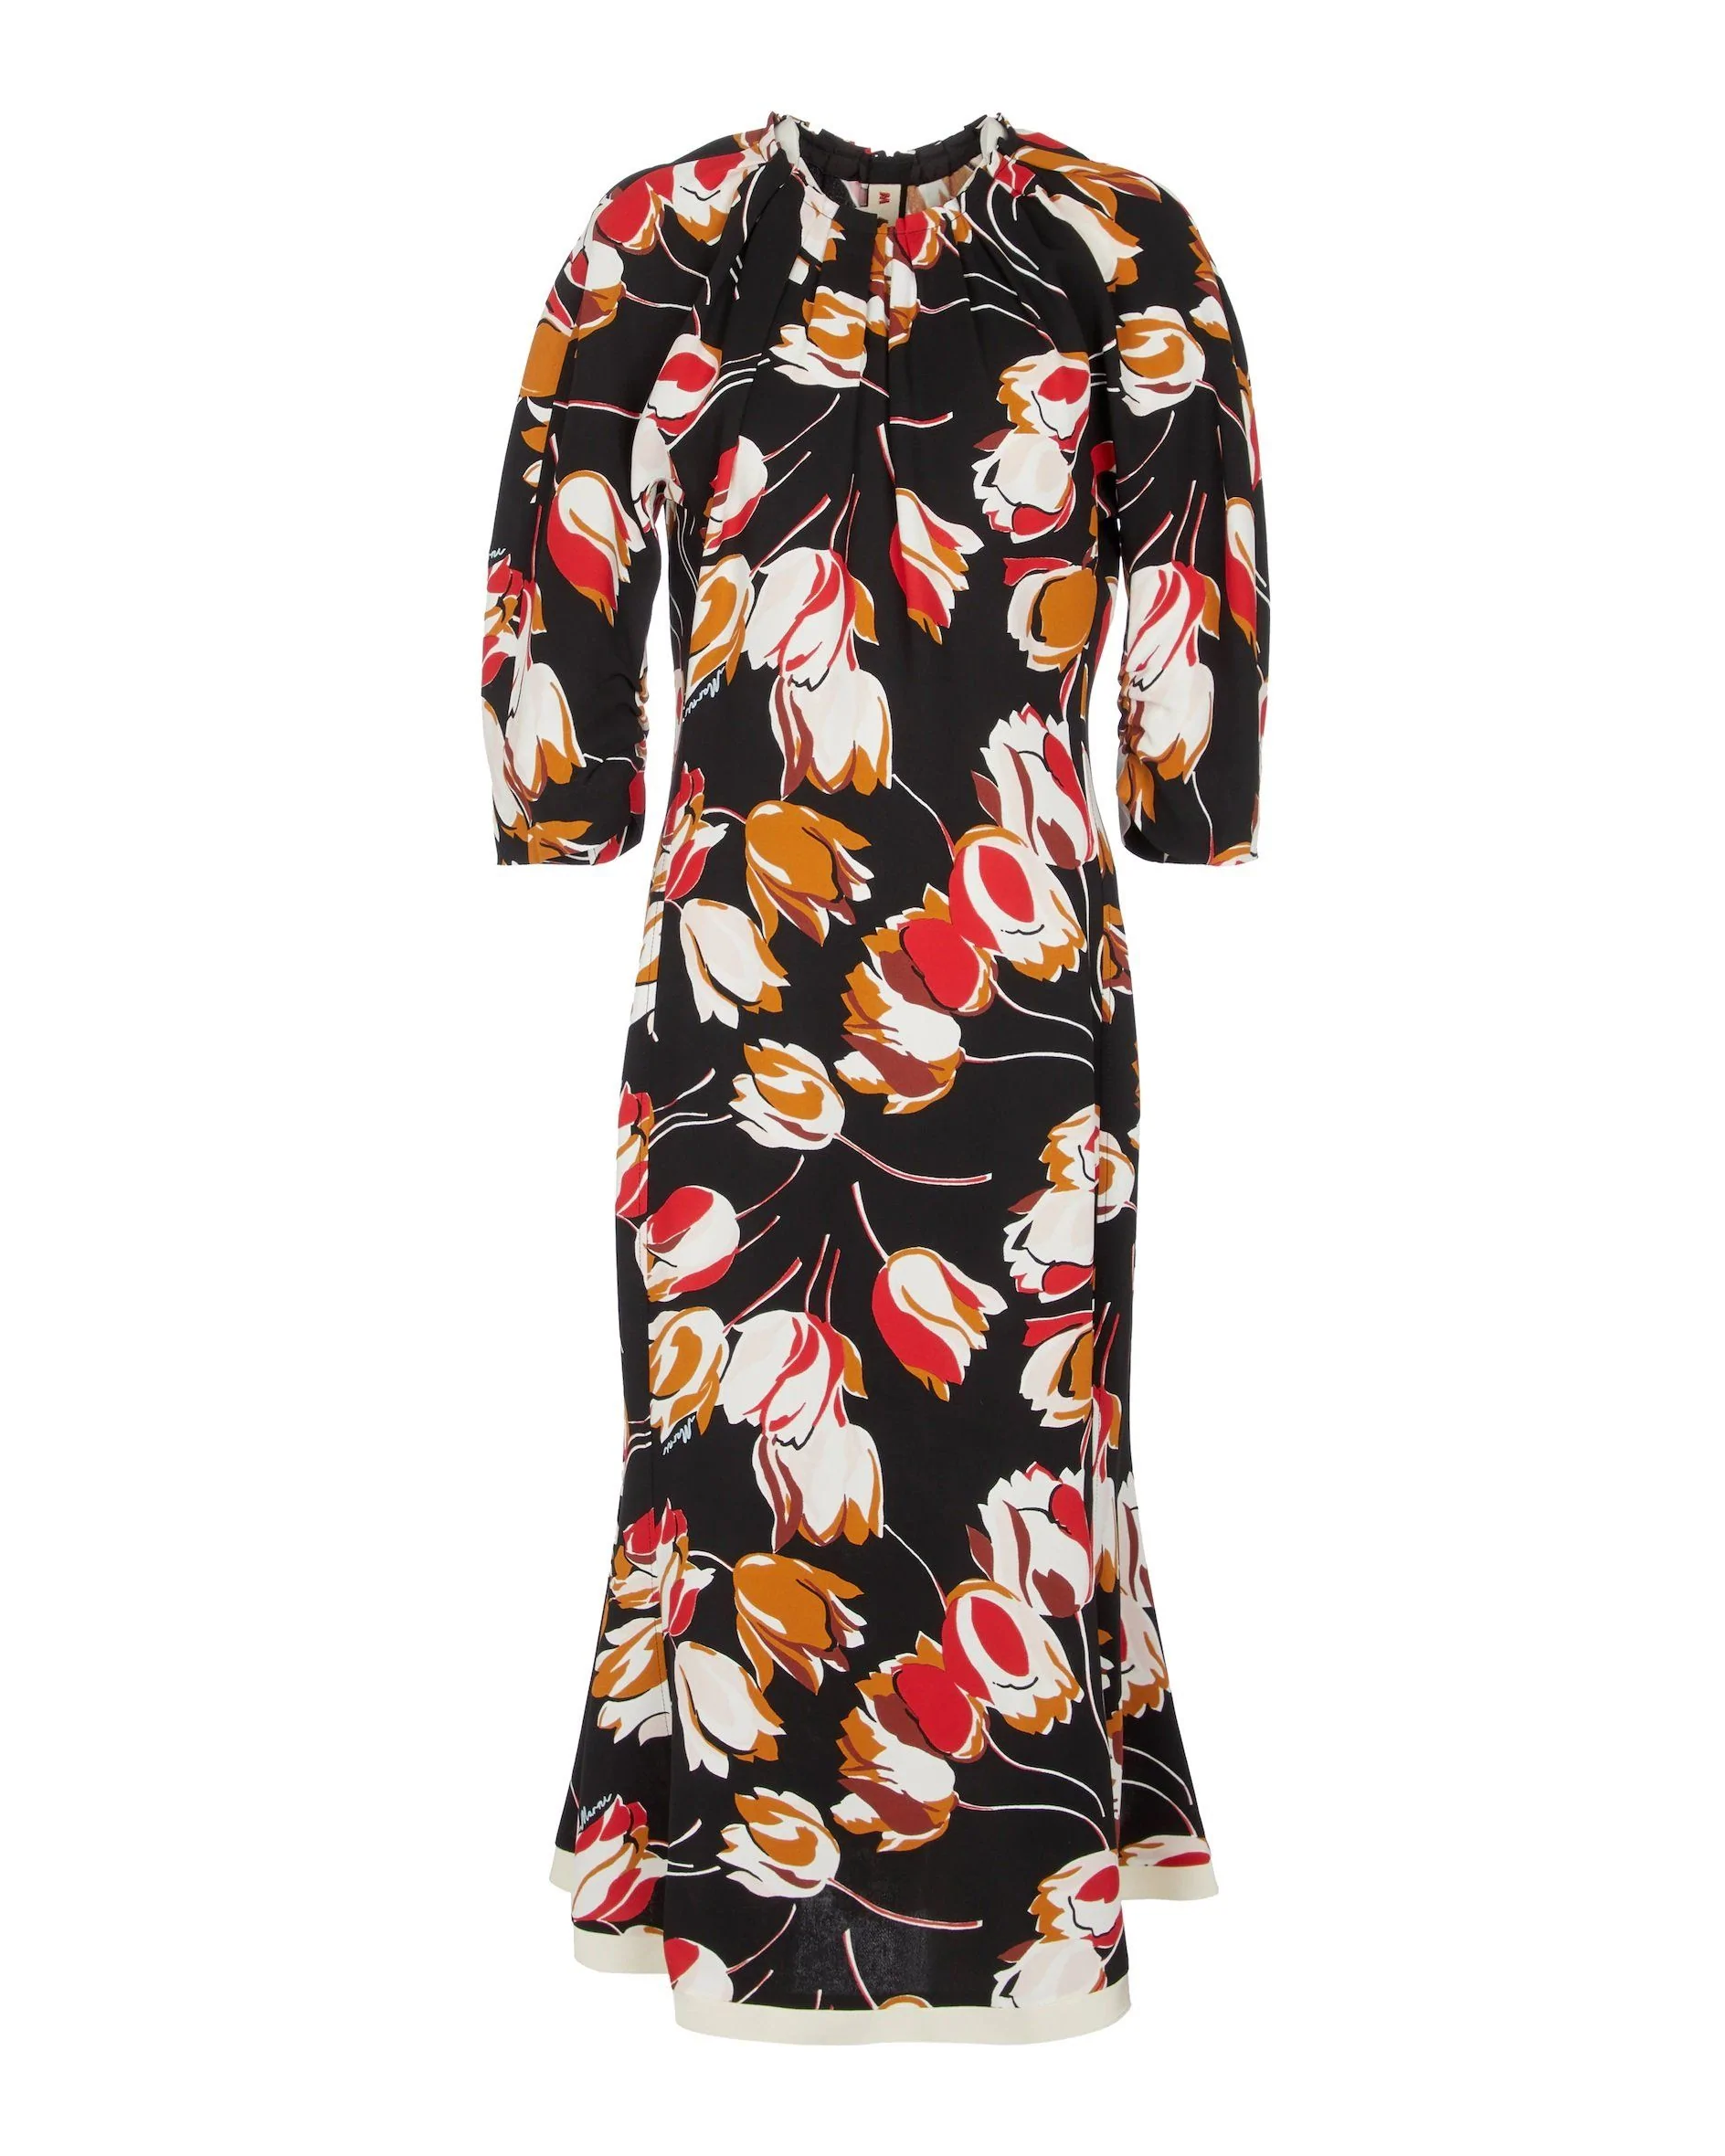 Marni Floral-Printed Dress